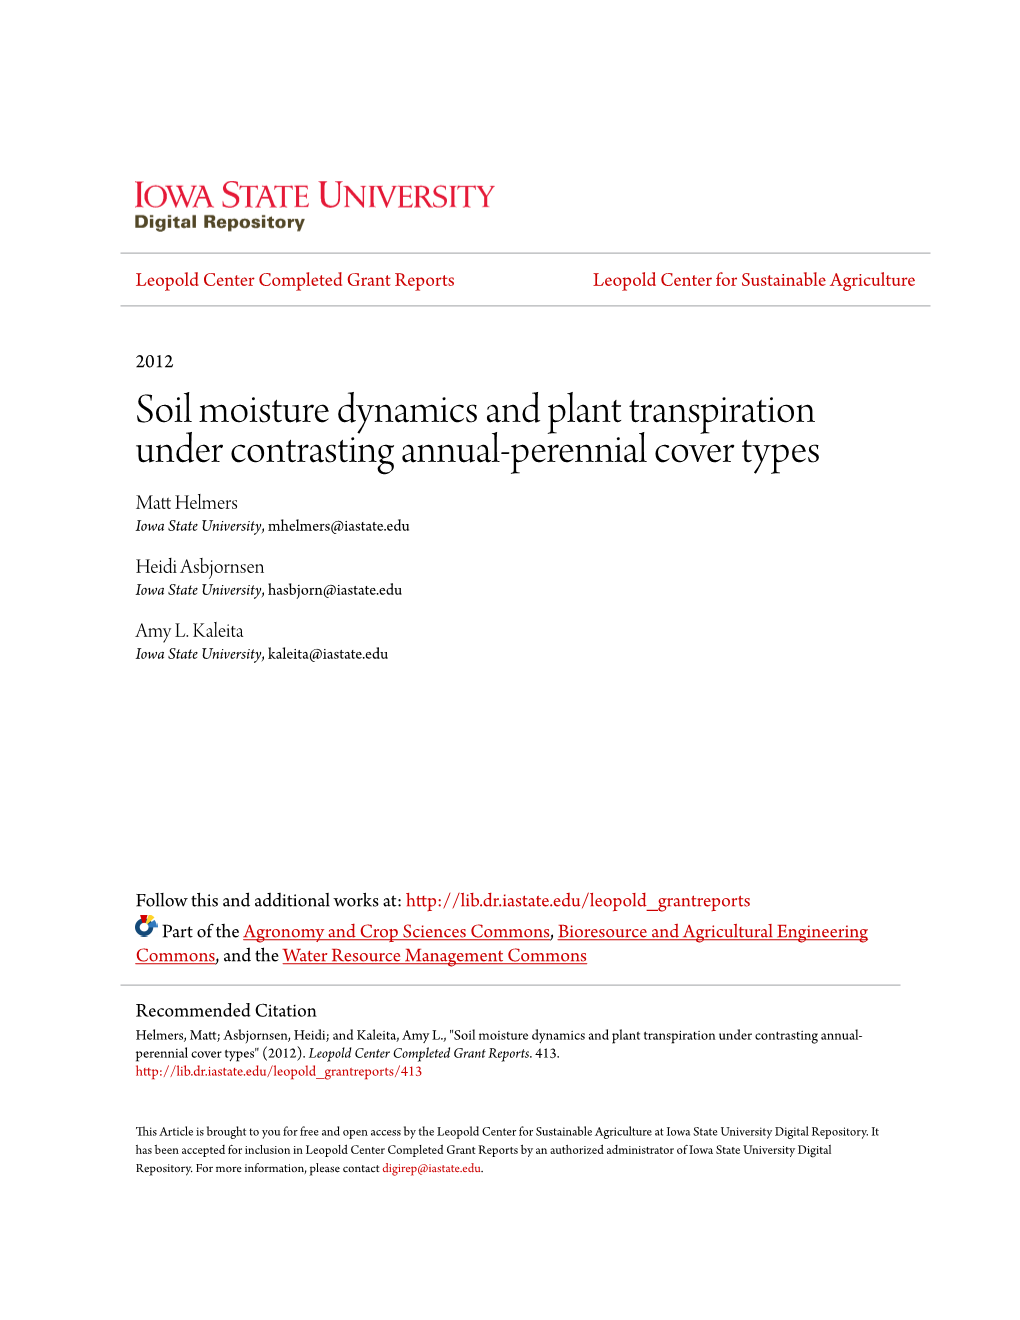 Soil Moisture Dynamics and Plant Transpiration Under Contrasting Annual-Perennial Cover Types Matt Elmeh Rs Iowa State University, Mhelmers@Iastate.Edu